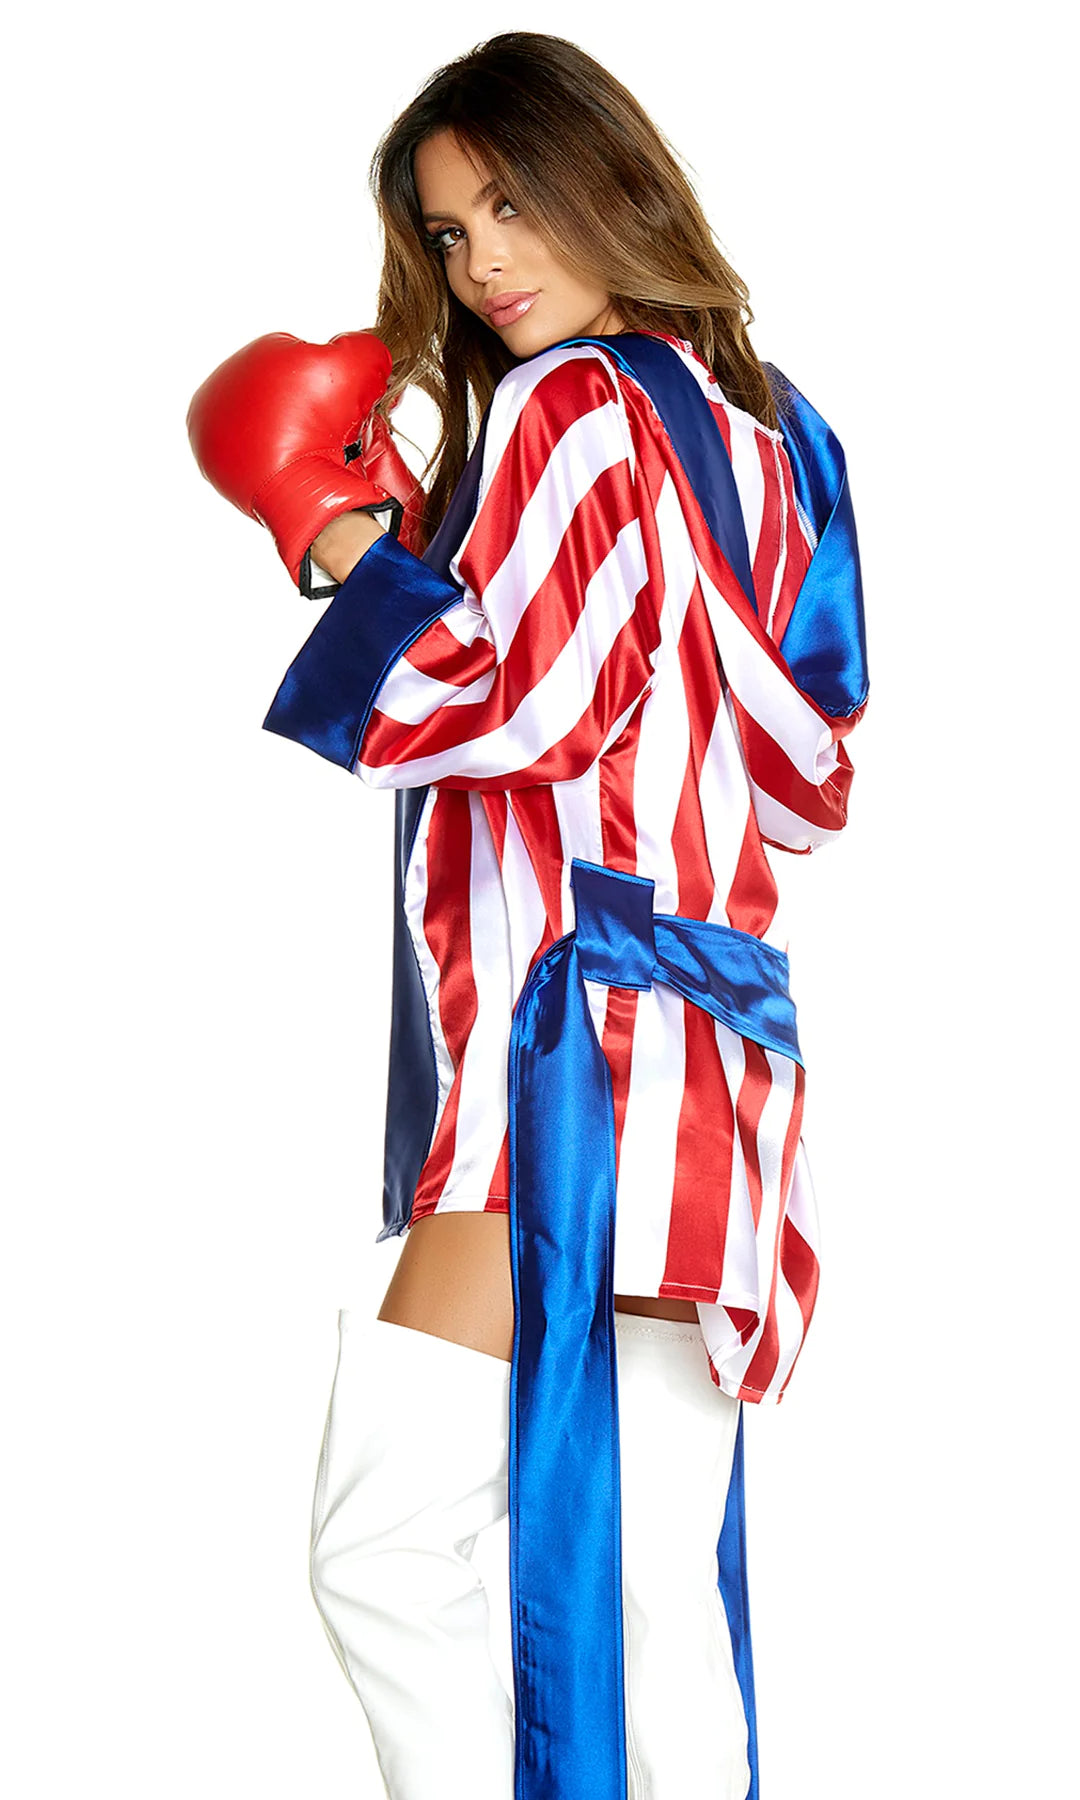 Champion Sexy Boxer Costume